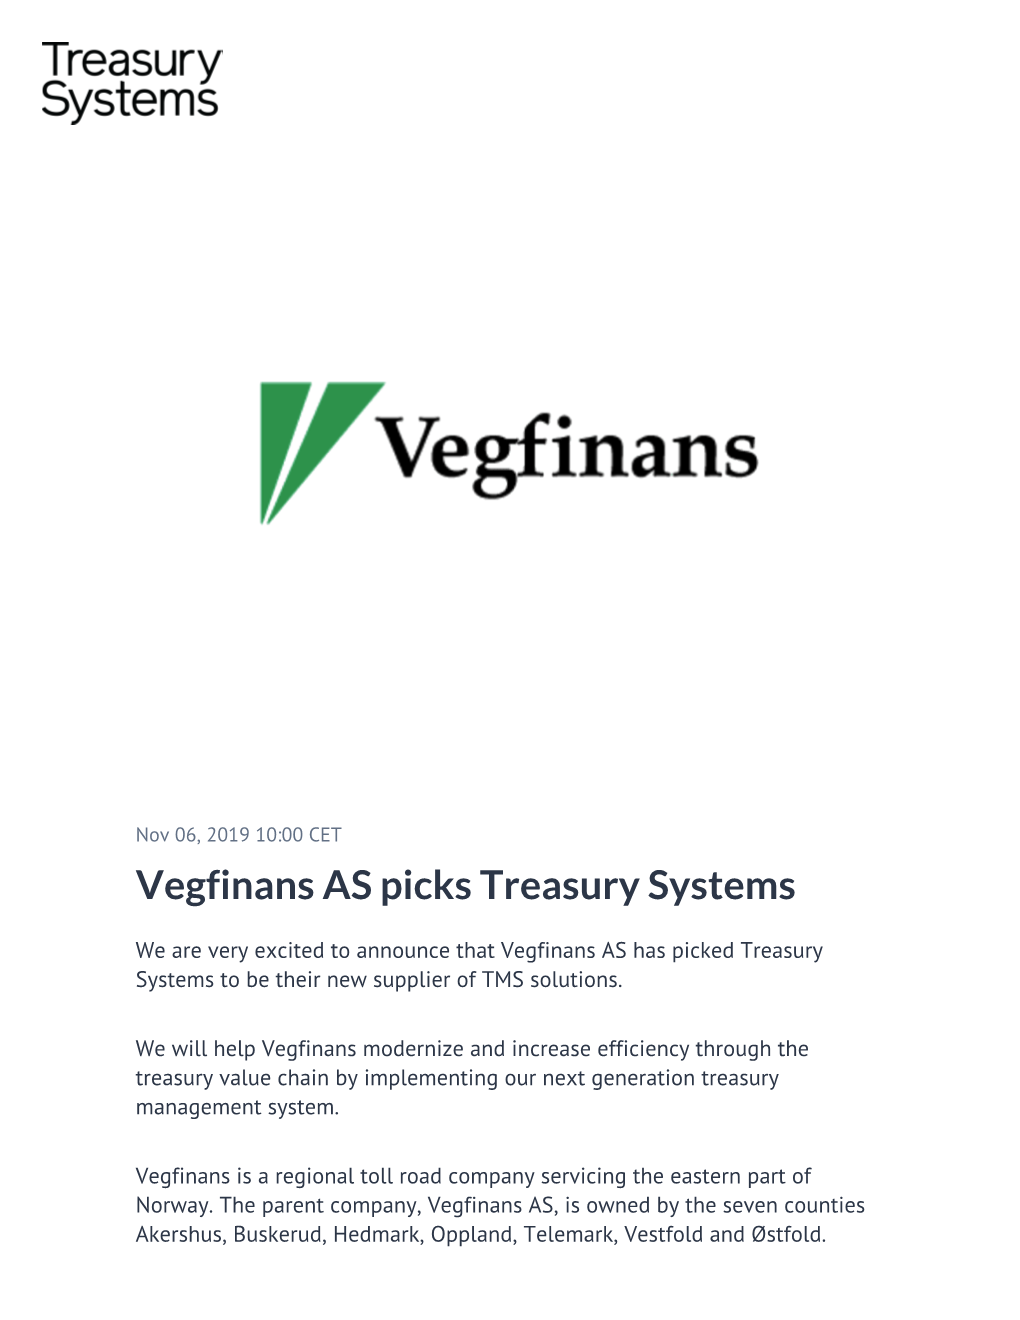 Vegfinans AS Picks Treasury Systems